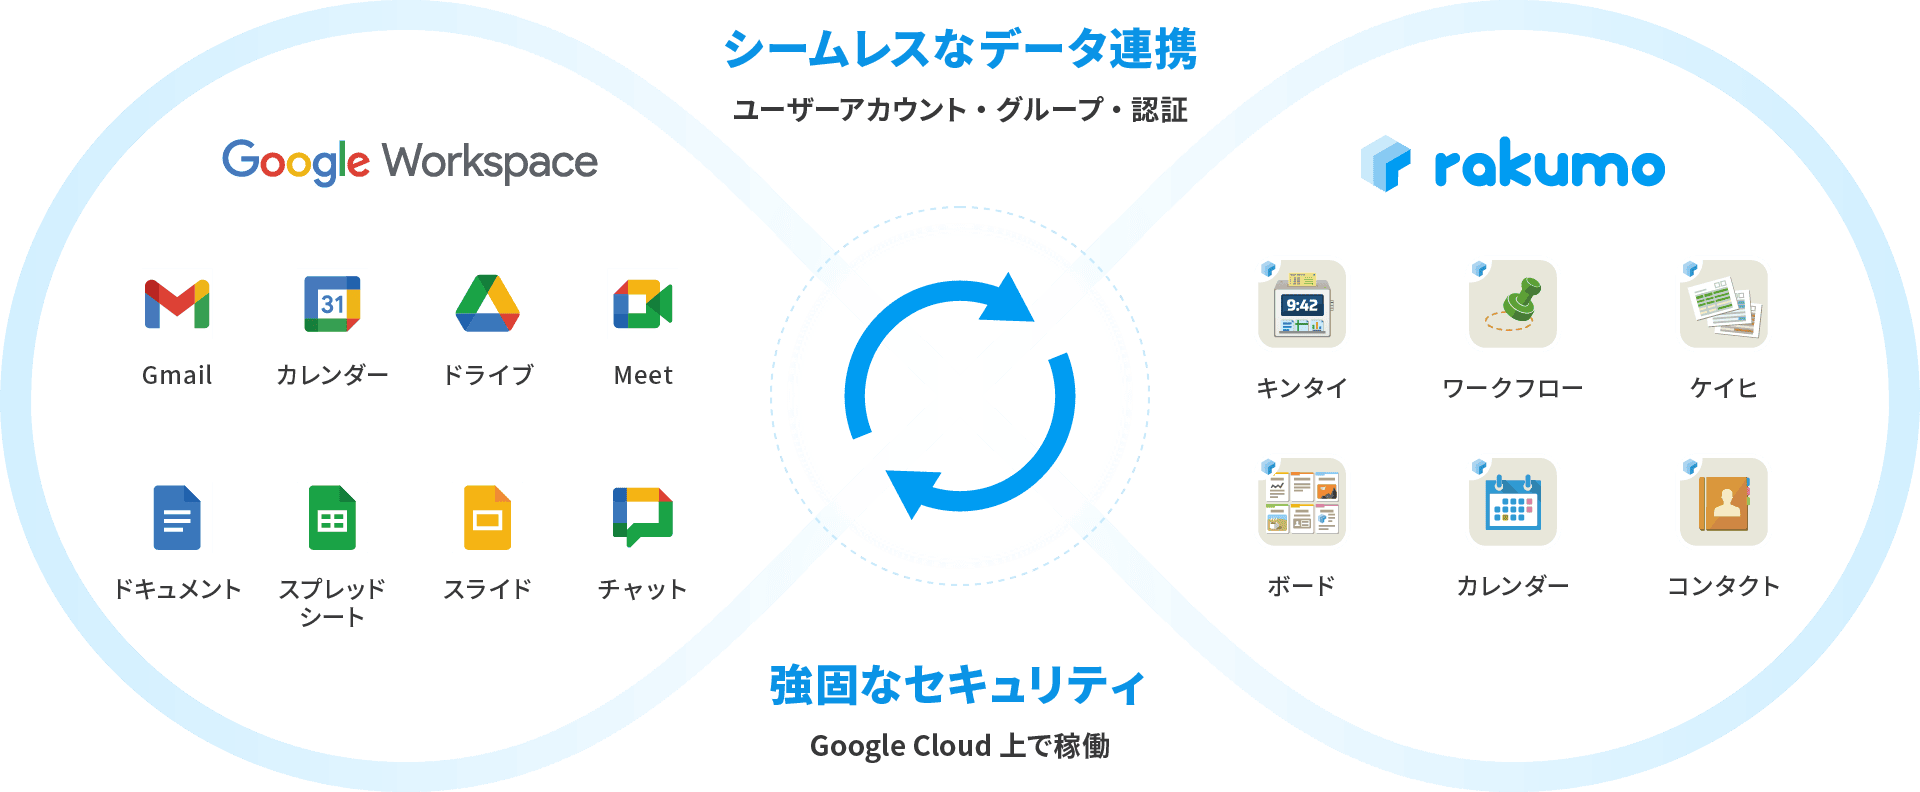 Google Workspace と rakumo の連携図